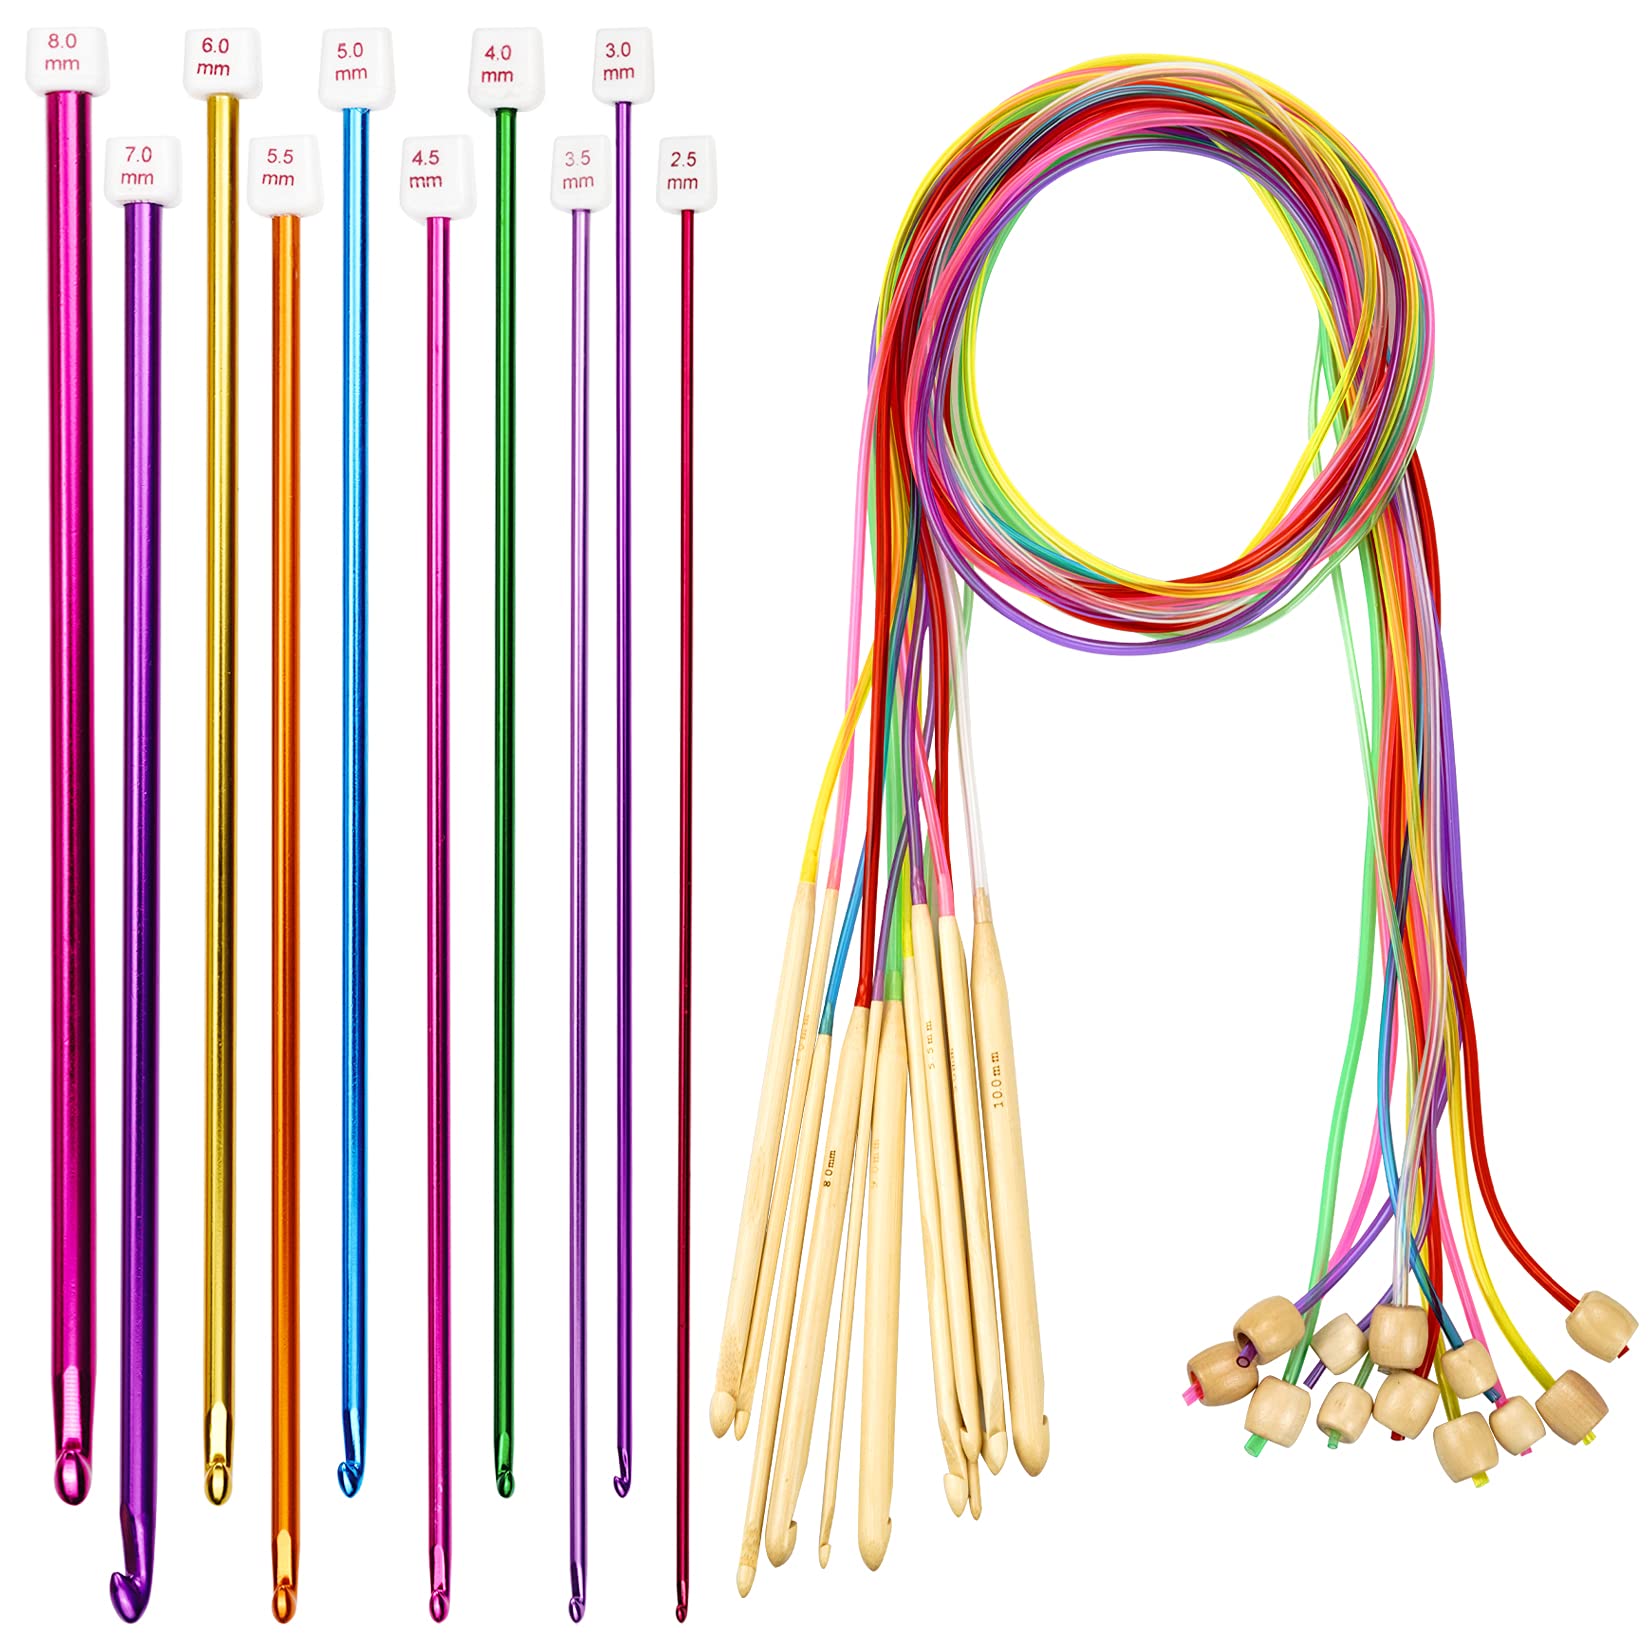 Metal Crochet Hook sizes 2-10mm -Craft Knitting Yarn Needles Wire